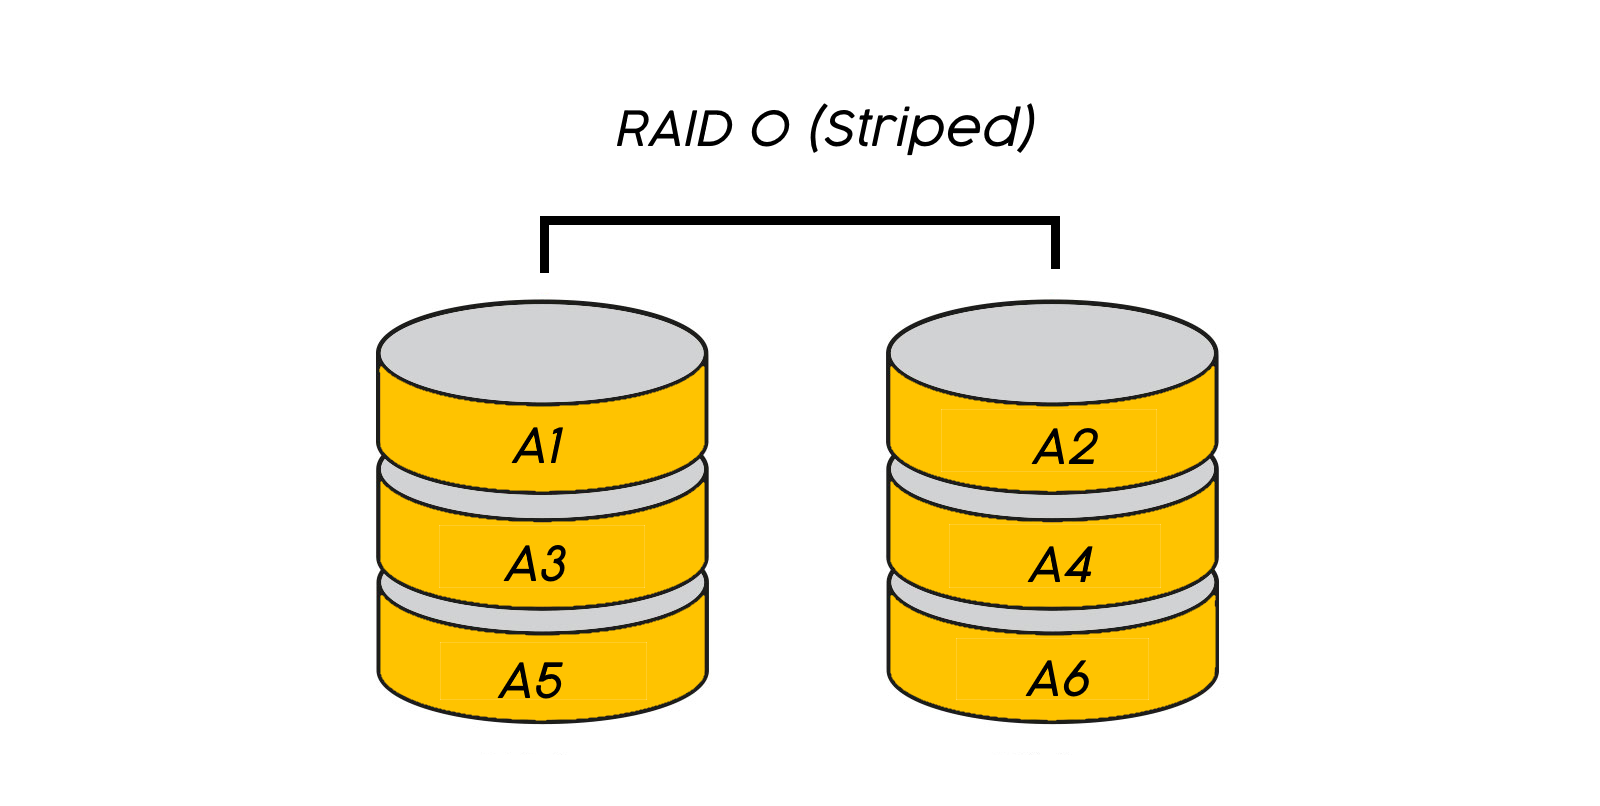 a diagram of how RAID 0 works